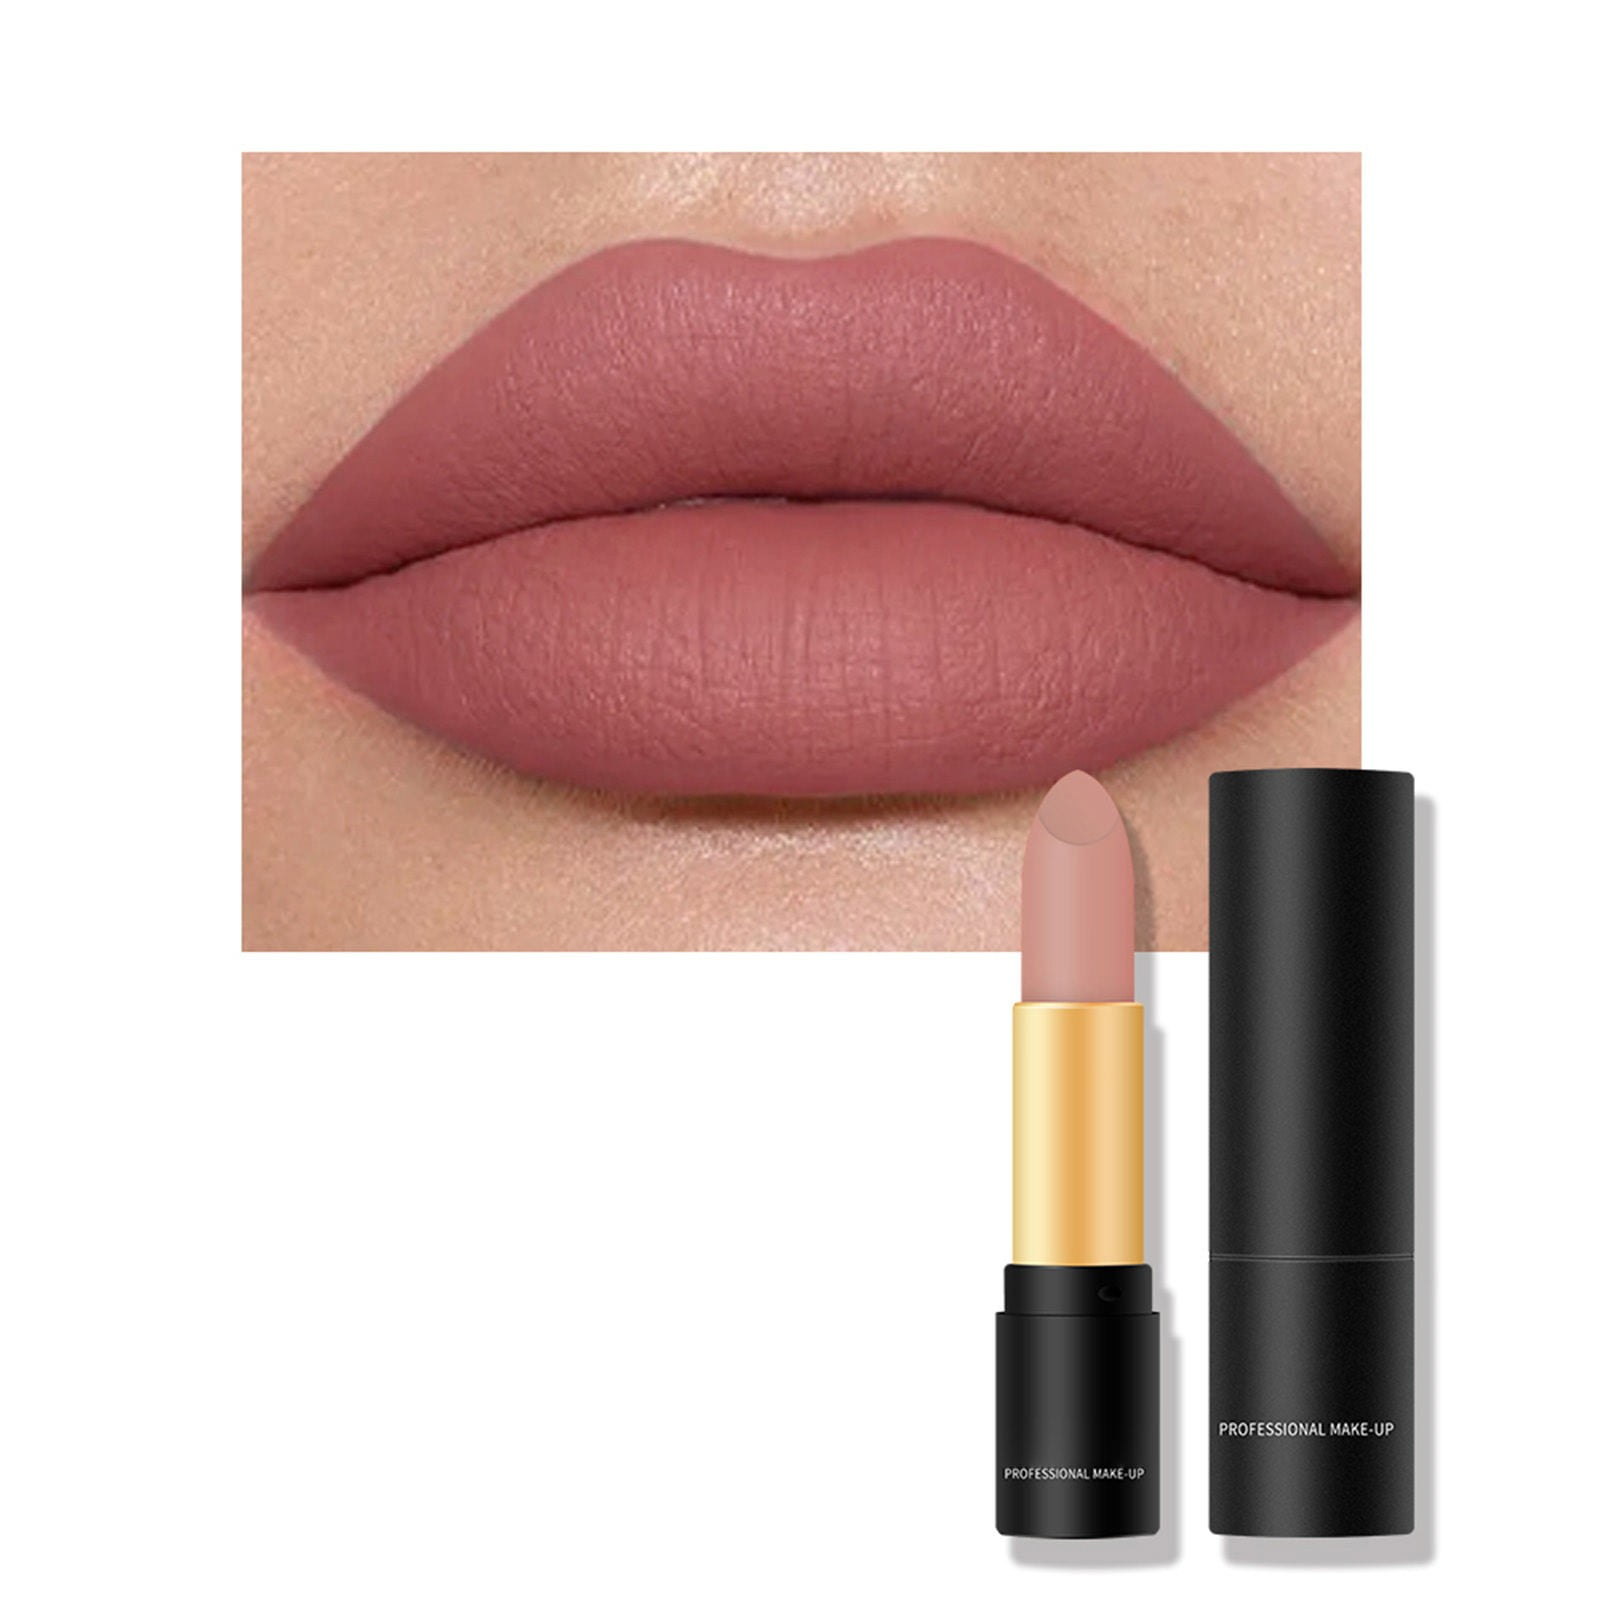 Horplkj On Sale 6 Colors Of Smooth Lipstick Long Lasting Waterproof Non